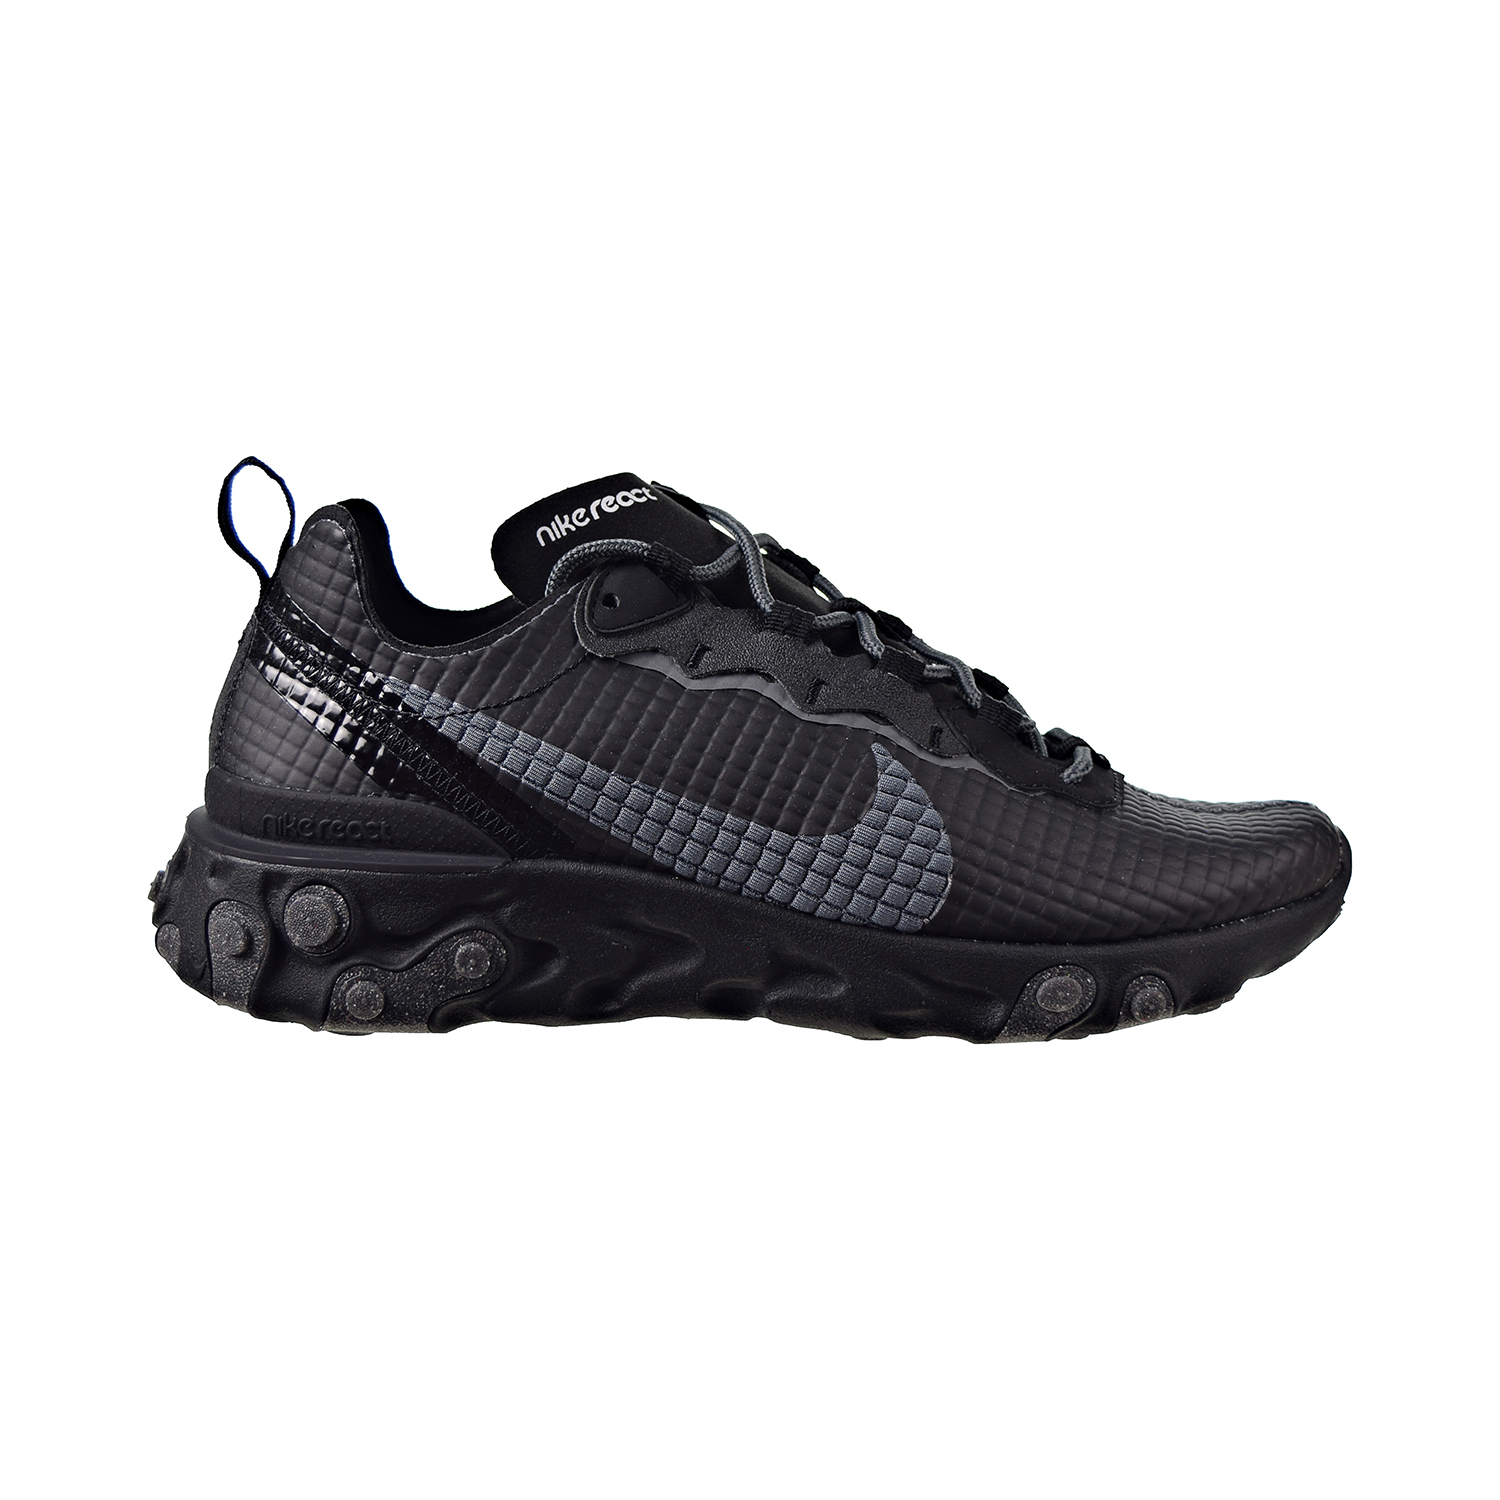 Nike React Element 55 PRM Men's Shoes Black-Dark Grey-Anthracite ci3835-002 - image 1 of 6